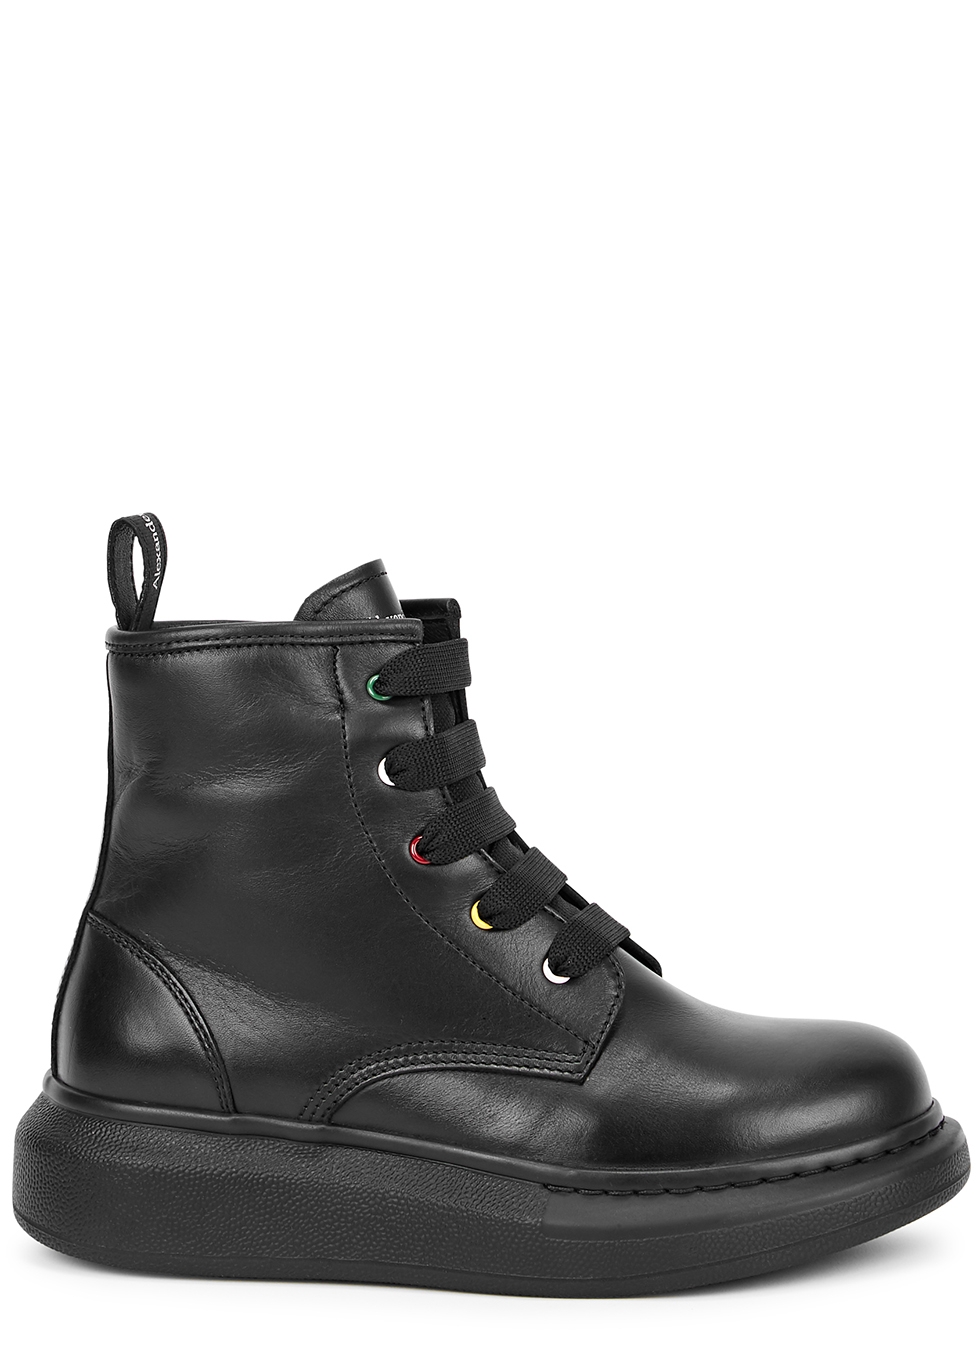 KIDS Biker black leather boots